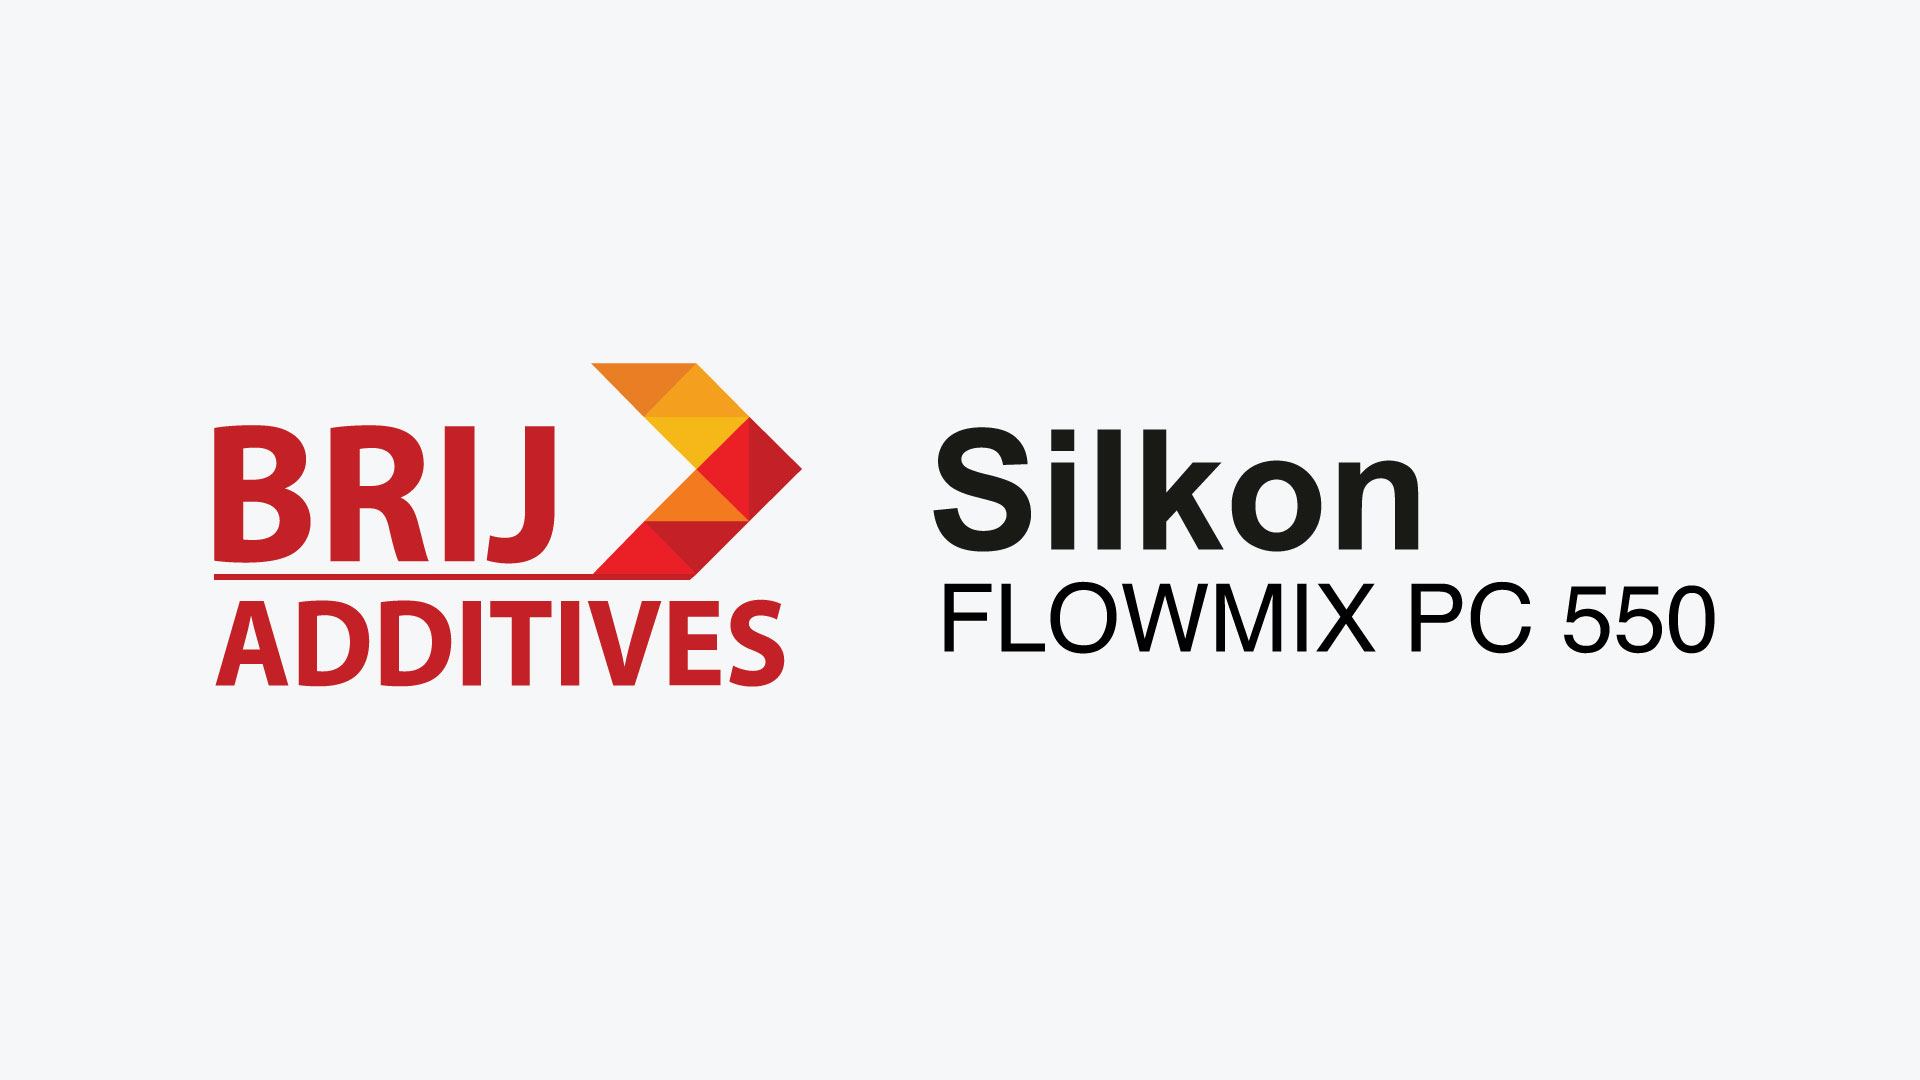 Silkon Flowmix PC 550